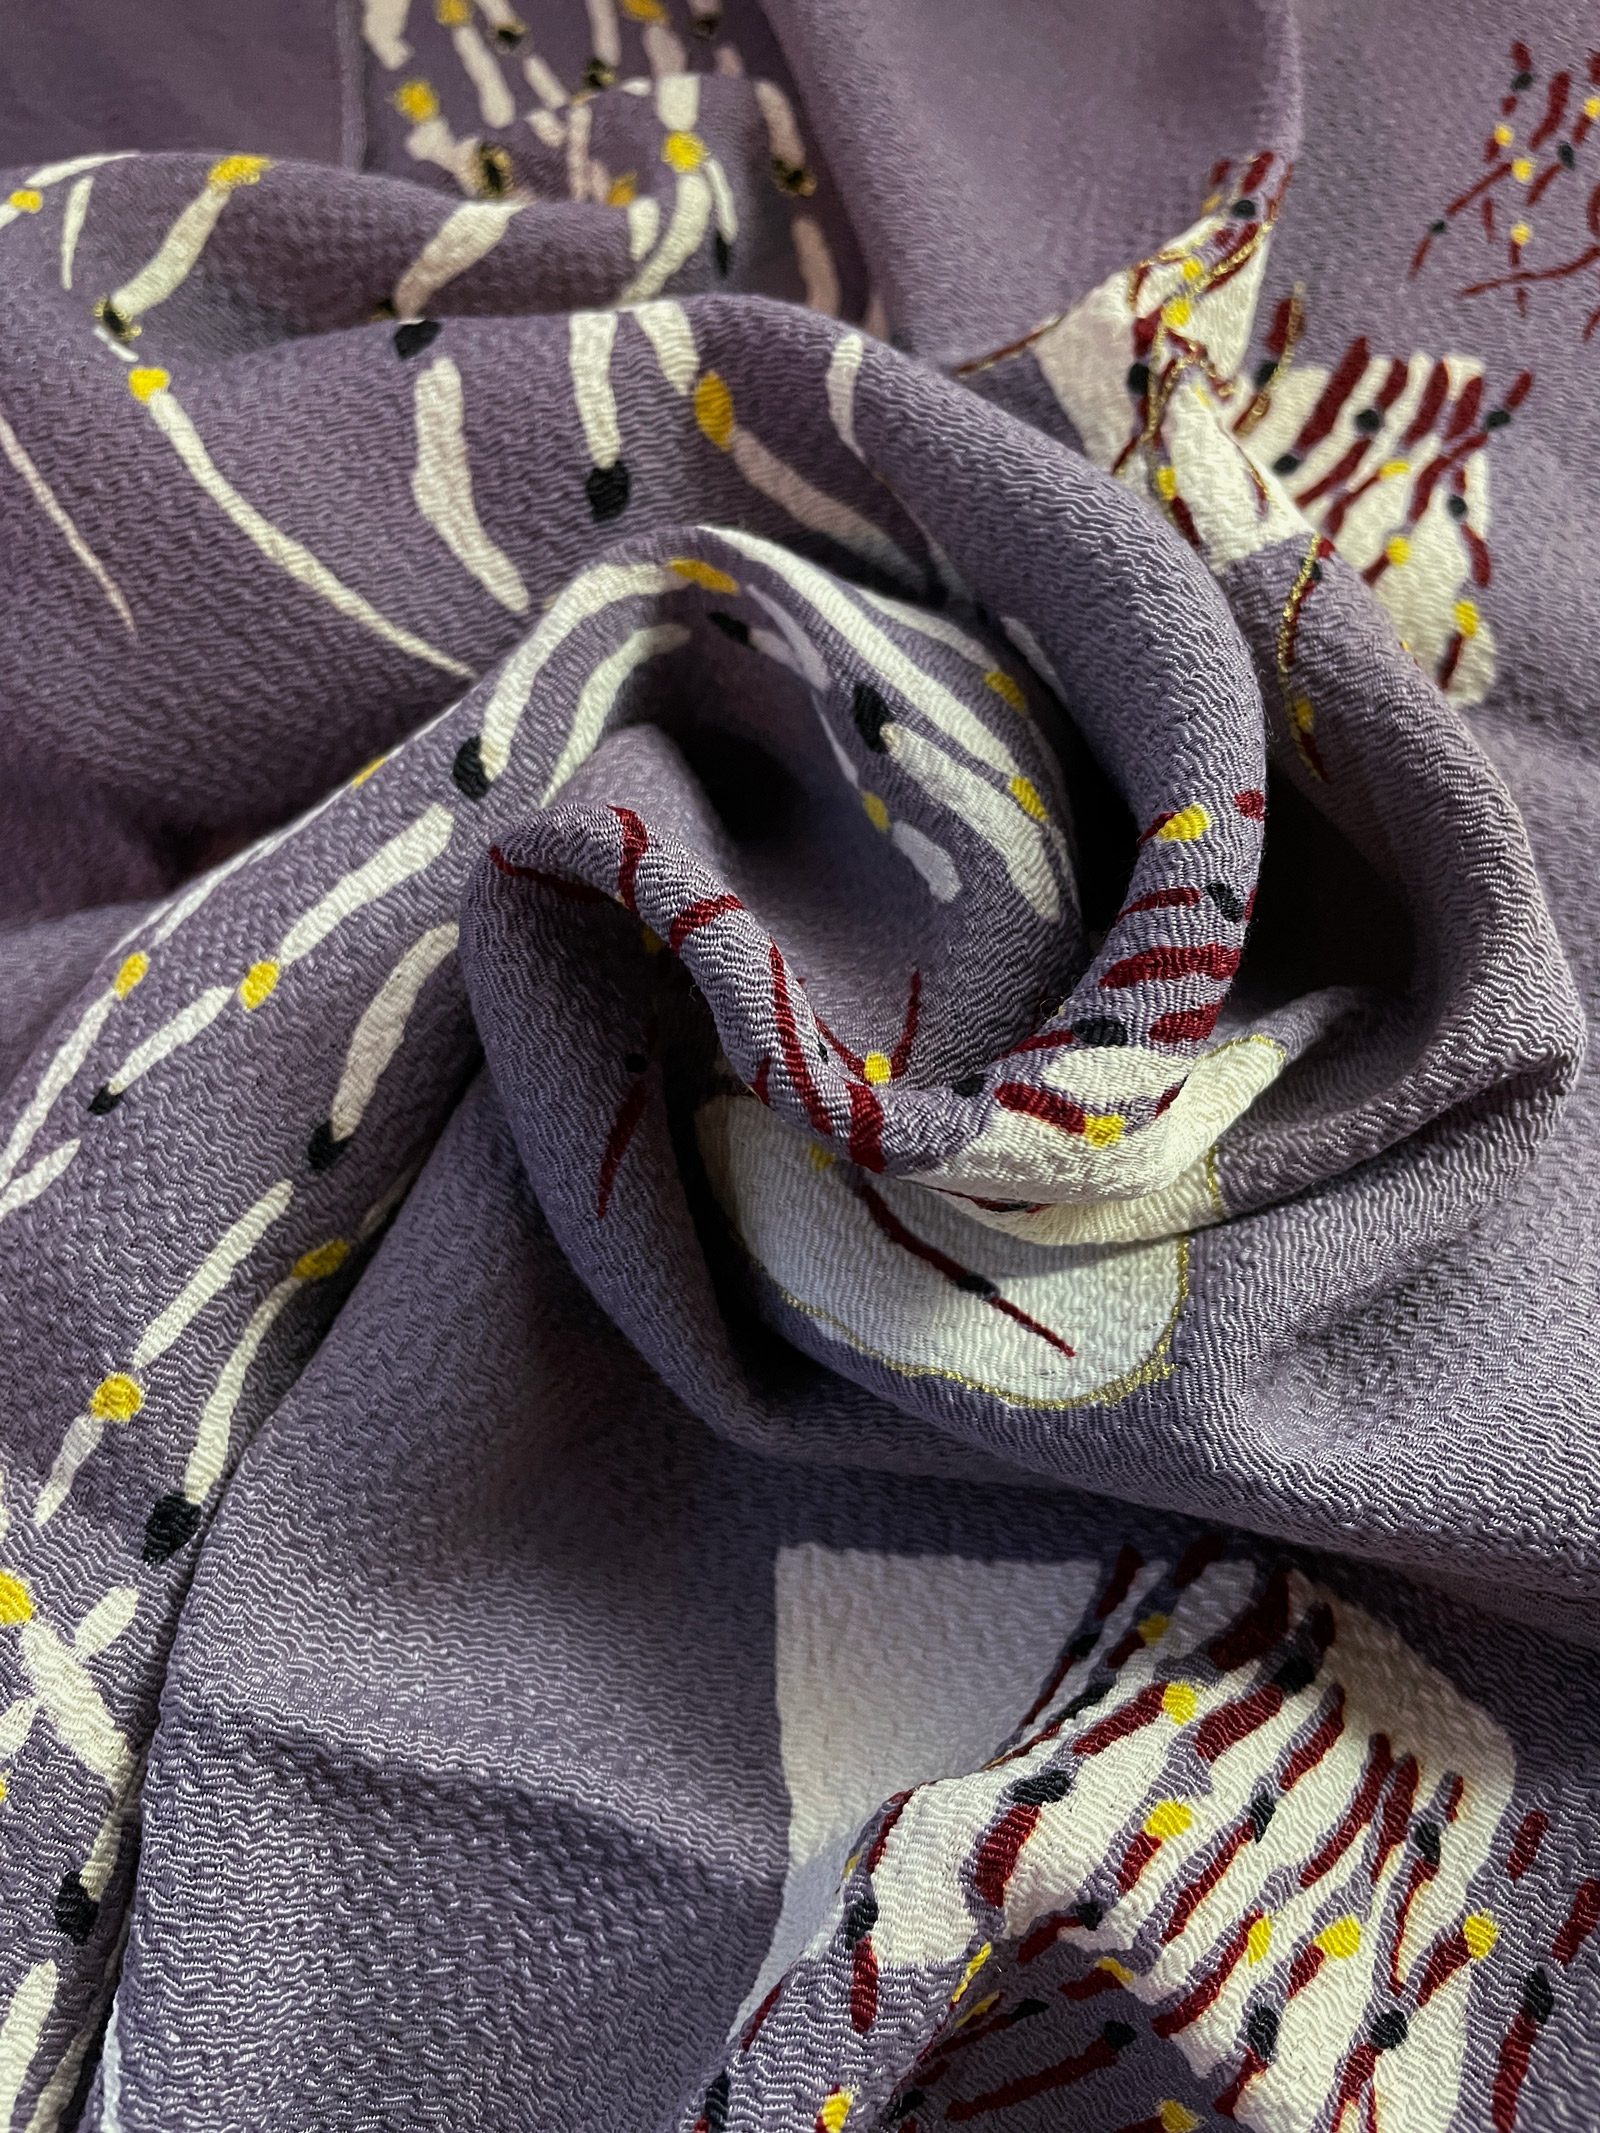 Furoshiki (wrapping cloth) in lavender-gray color